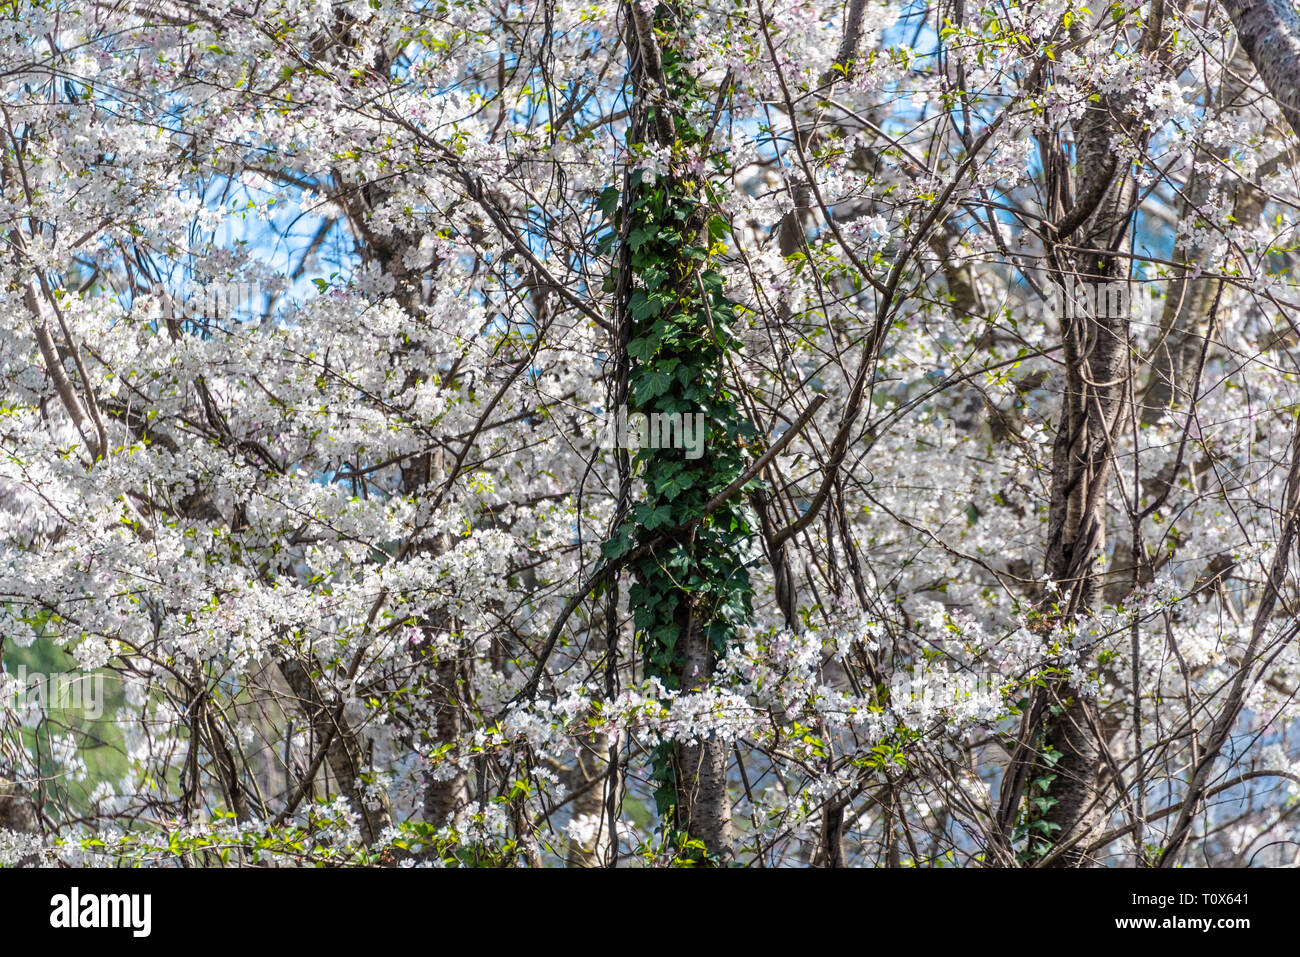 English ivy climbing a tree trunk amidst white cherry tree blossoms on a beautiful spring day in Metro Atlanta, Georgia. (USA) Stock Photo